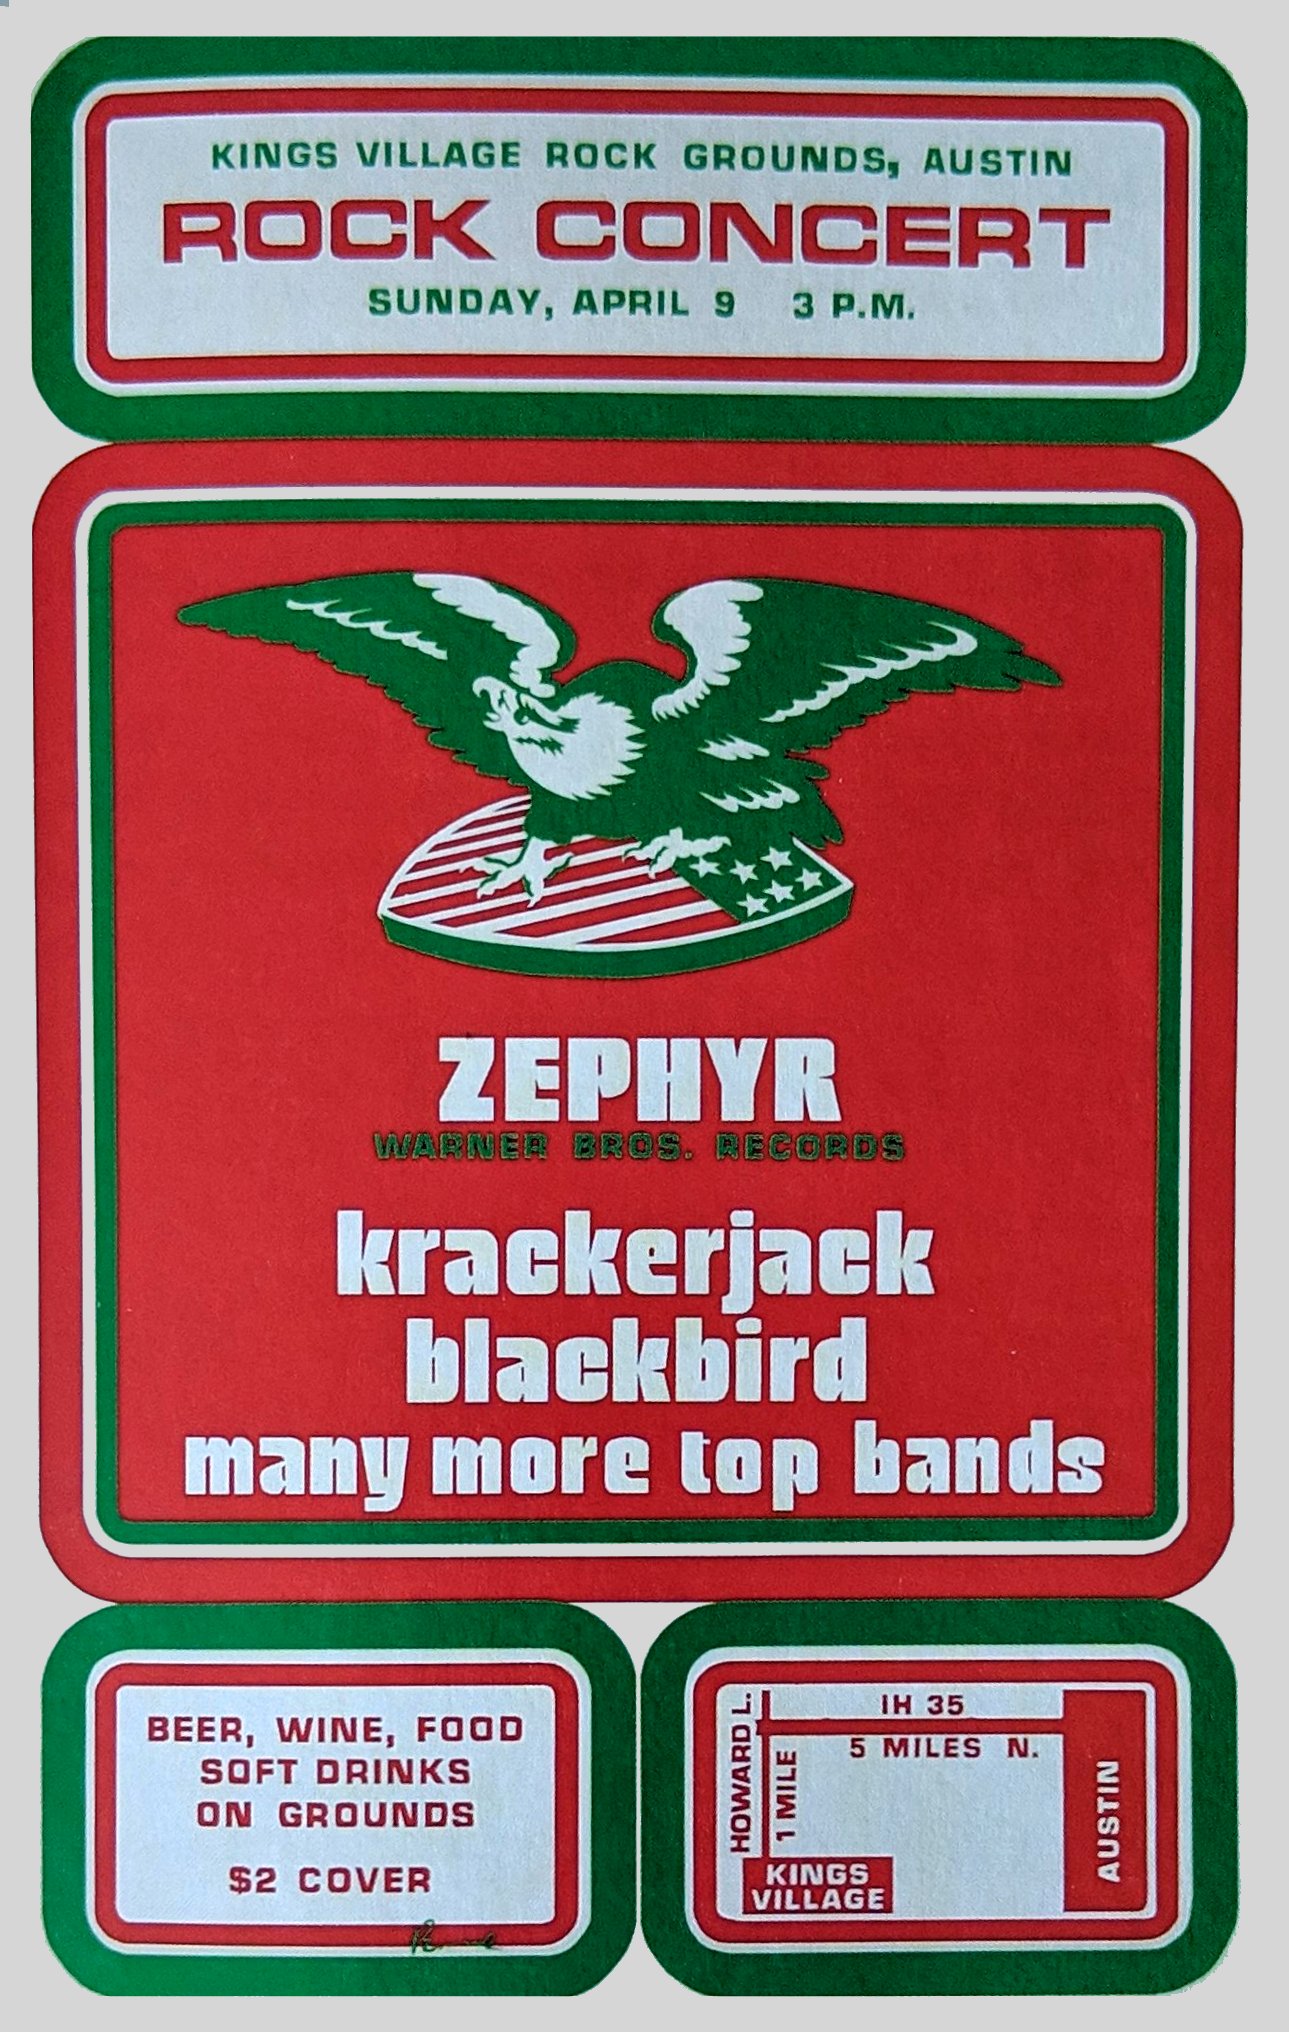 Blackbird Gig Poster